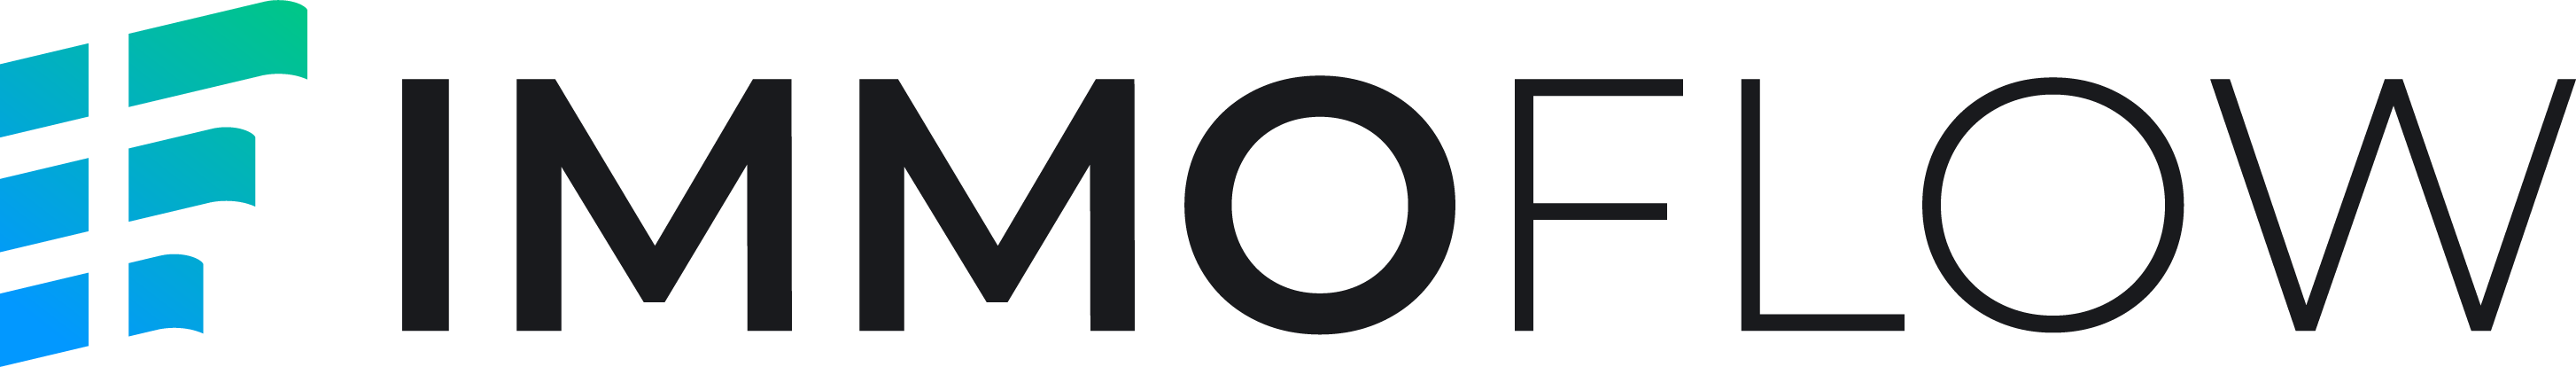 immoflow logo